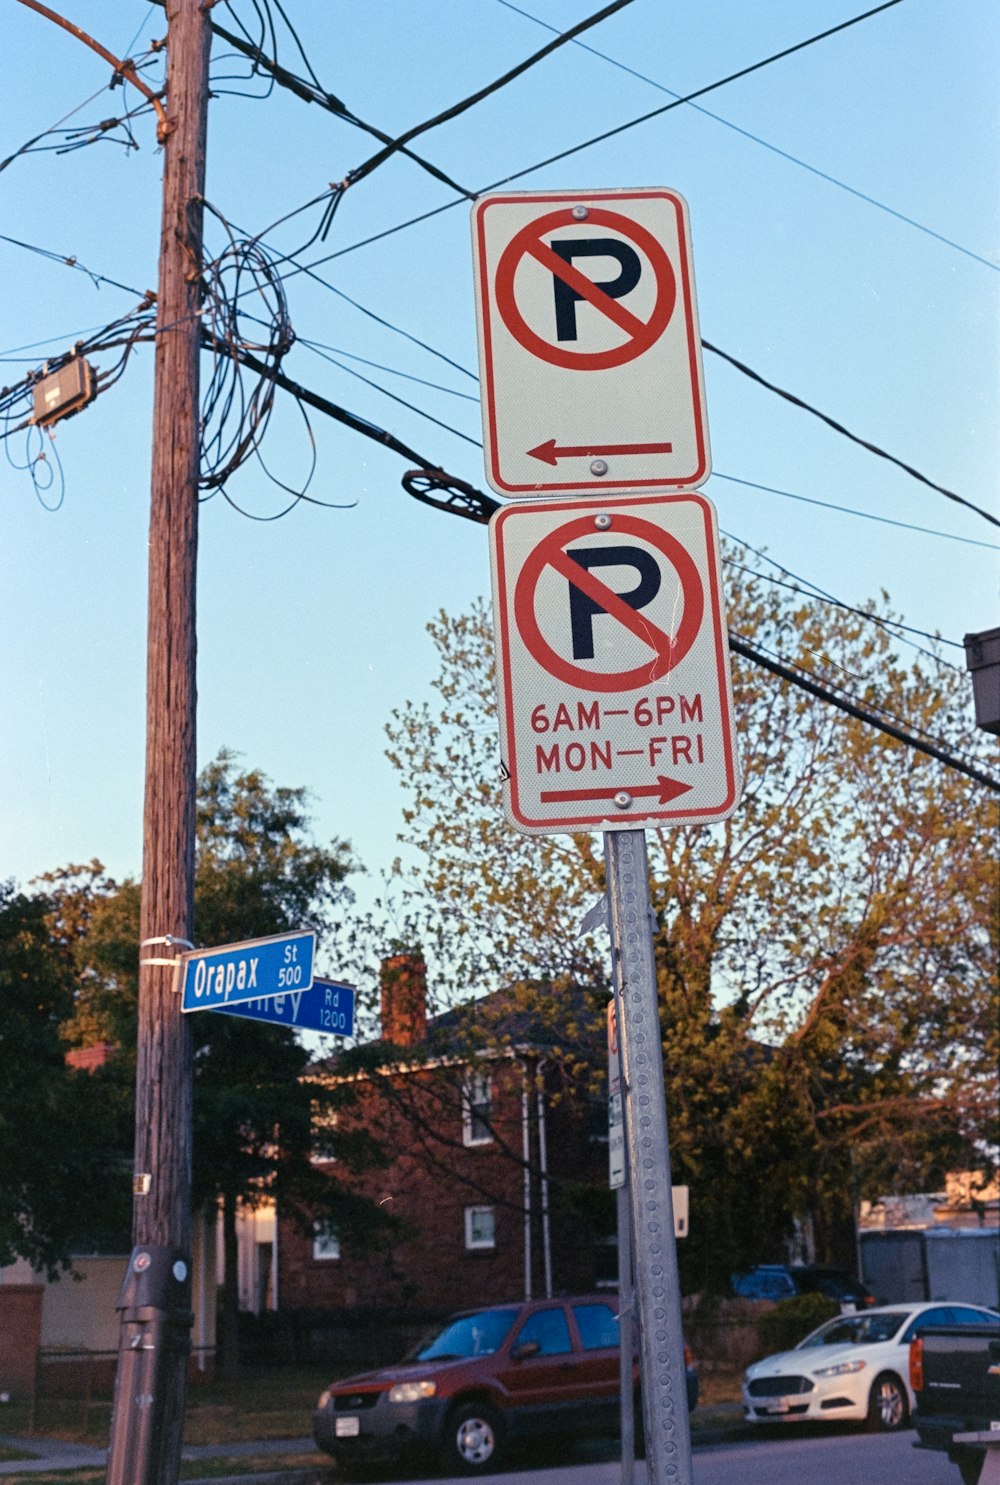 a no parking sign on a street corner